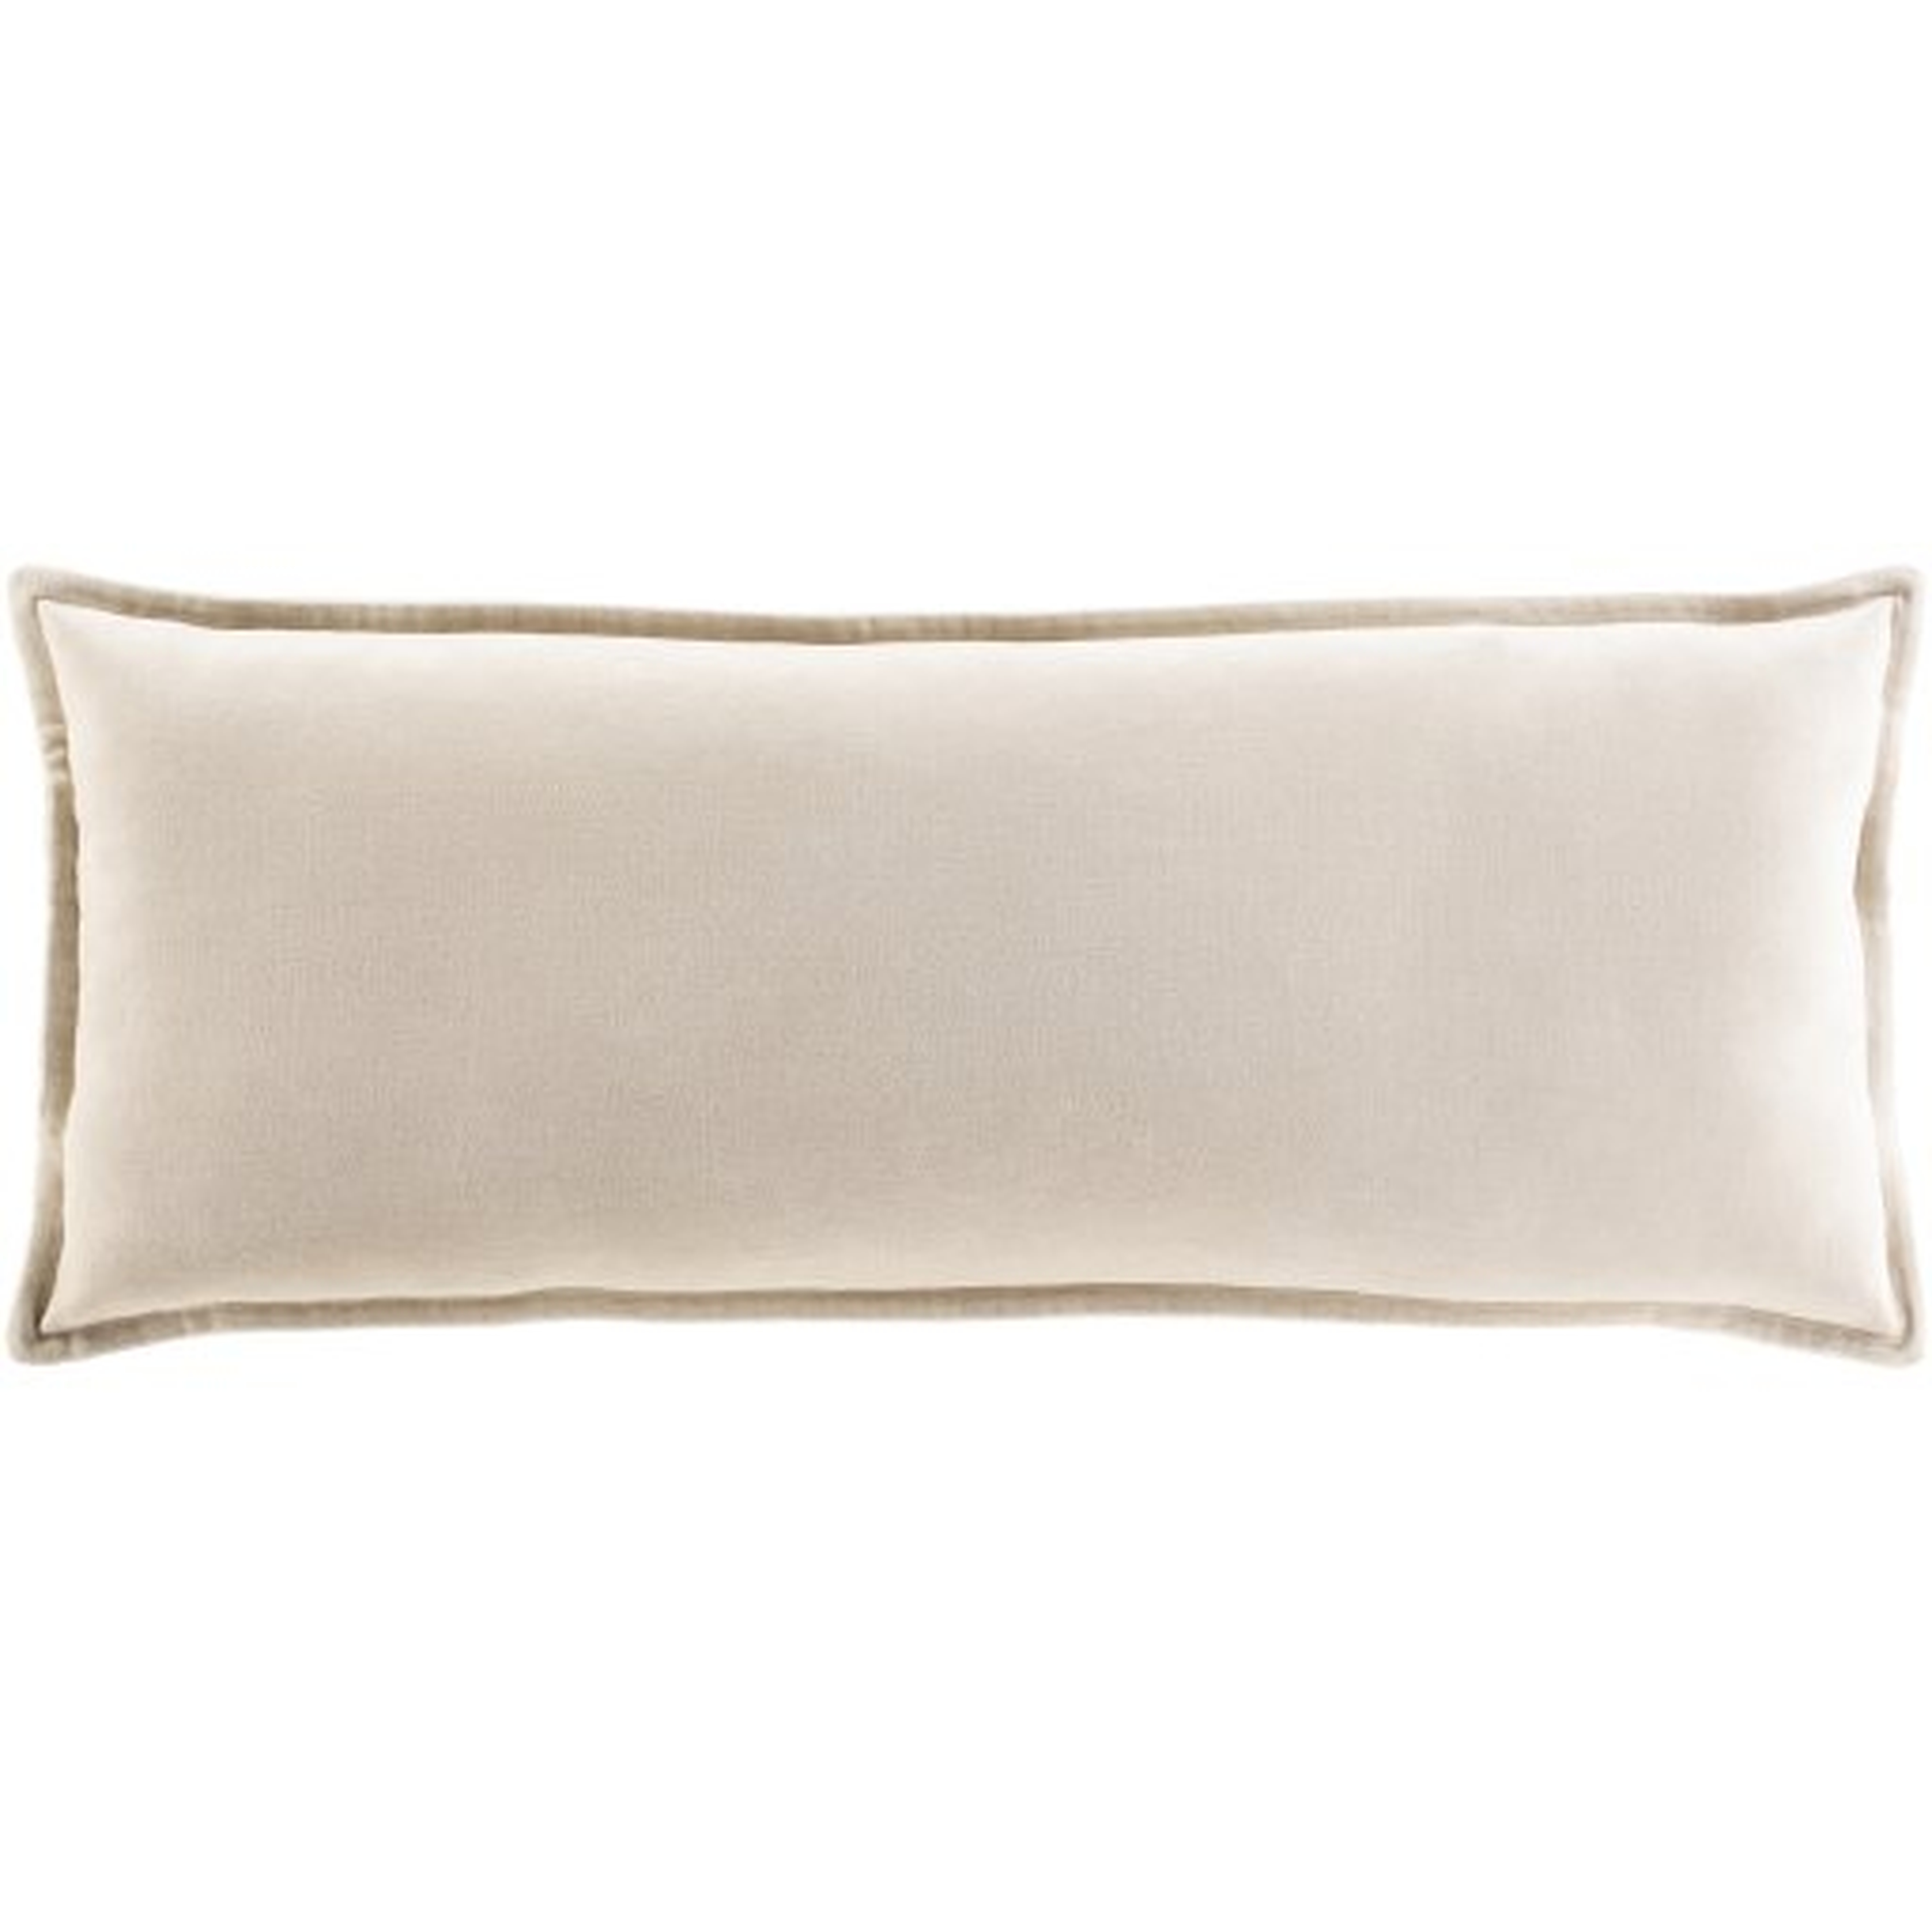 30" x 12" Gabrielle Lumbar Pillow Cover - Studio Marcette